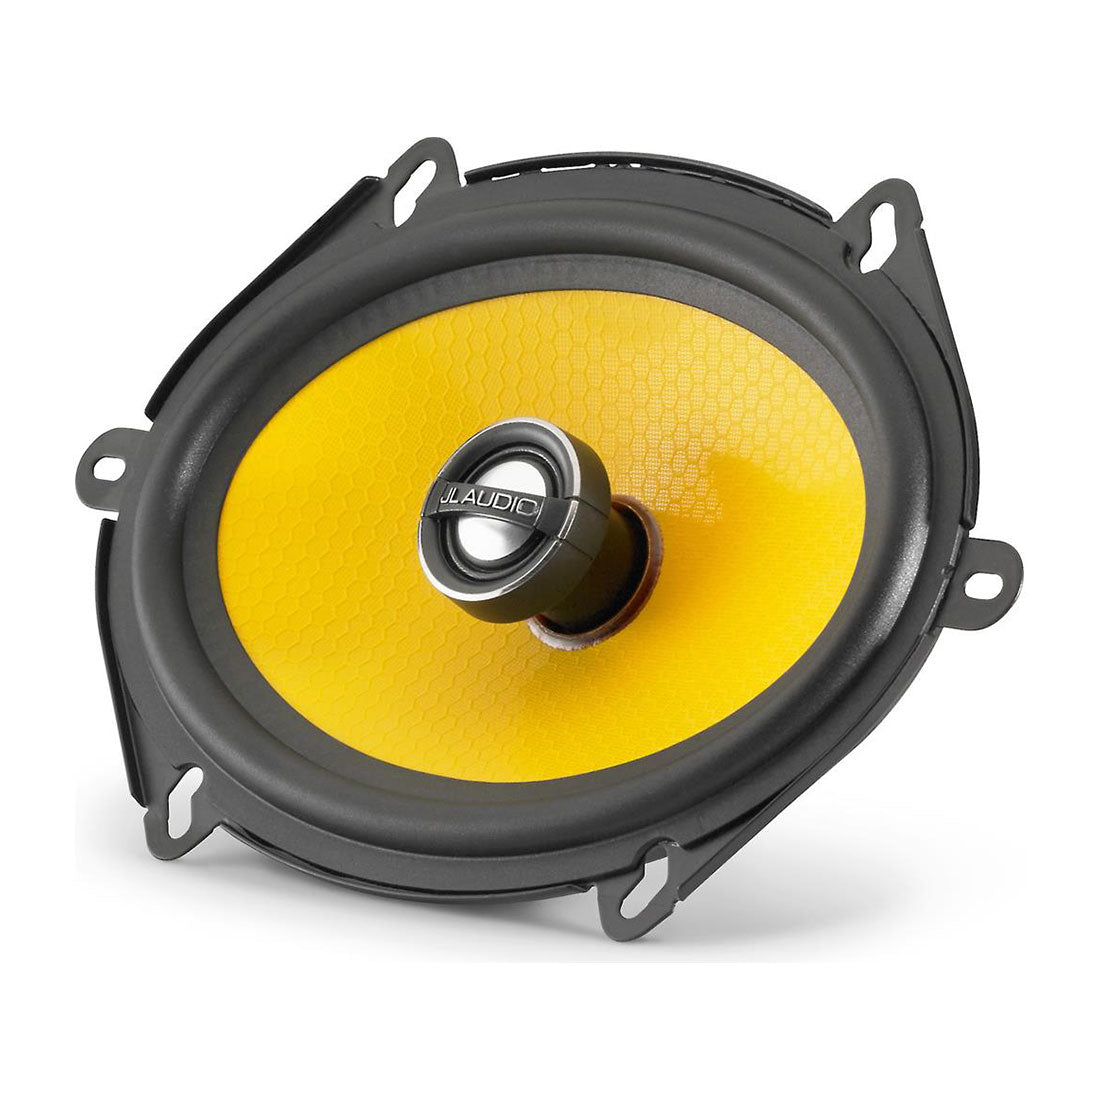 JL Audio C1-570x 5×7″ 2-Way Coaxial Speakers – Pair – #99044